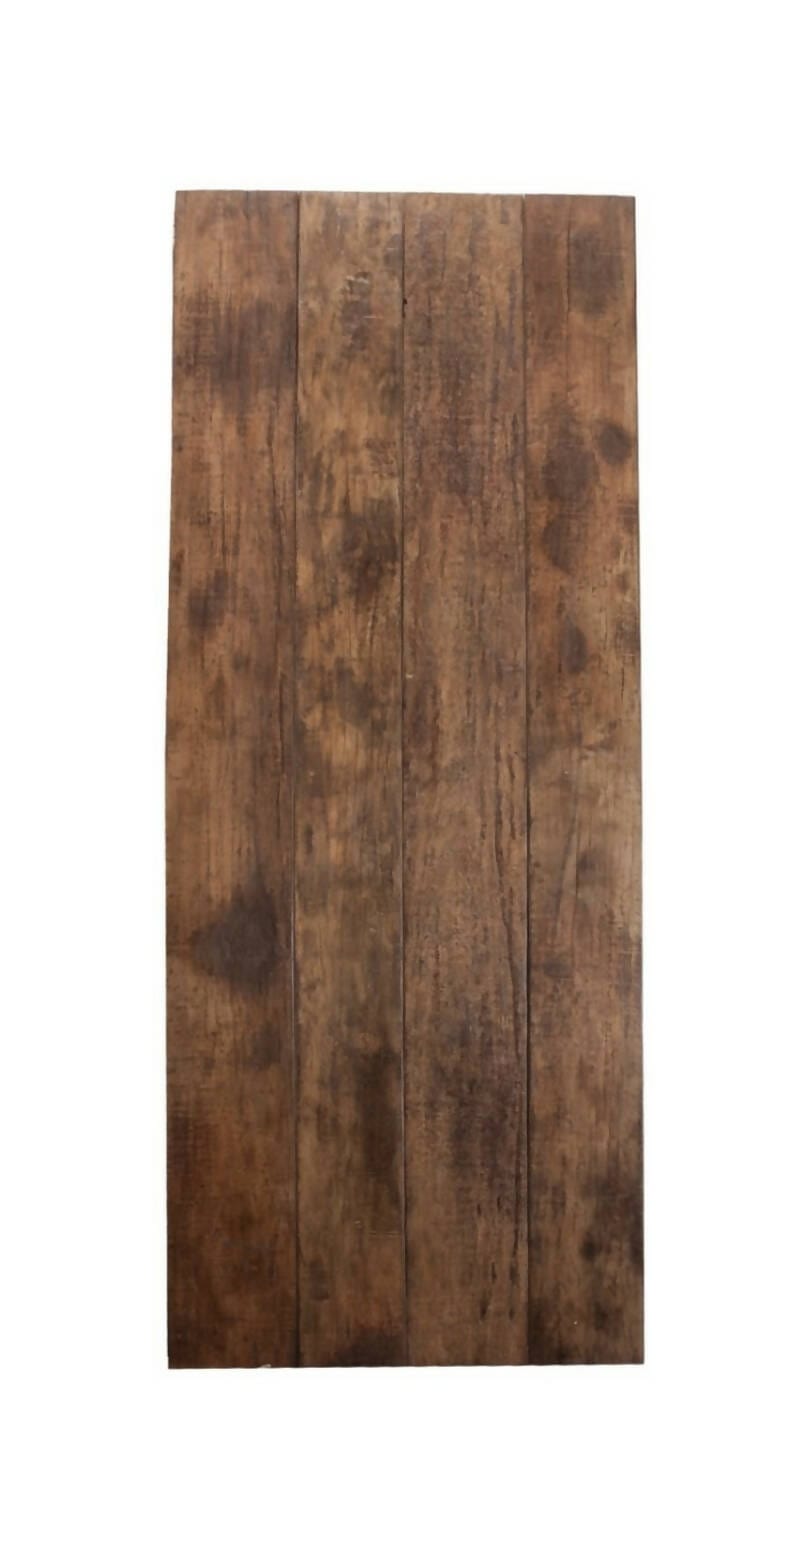 Barn-wood Table Slab America Reclaimed